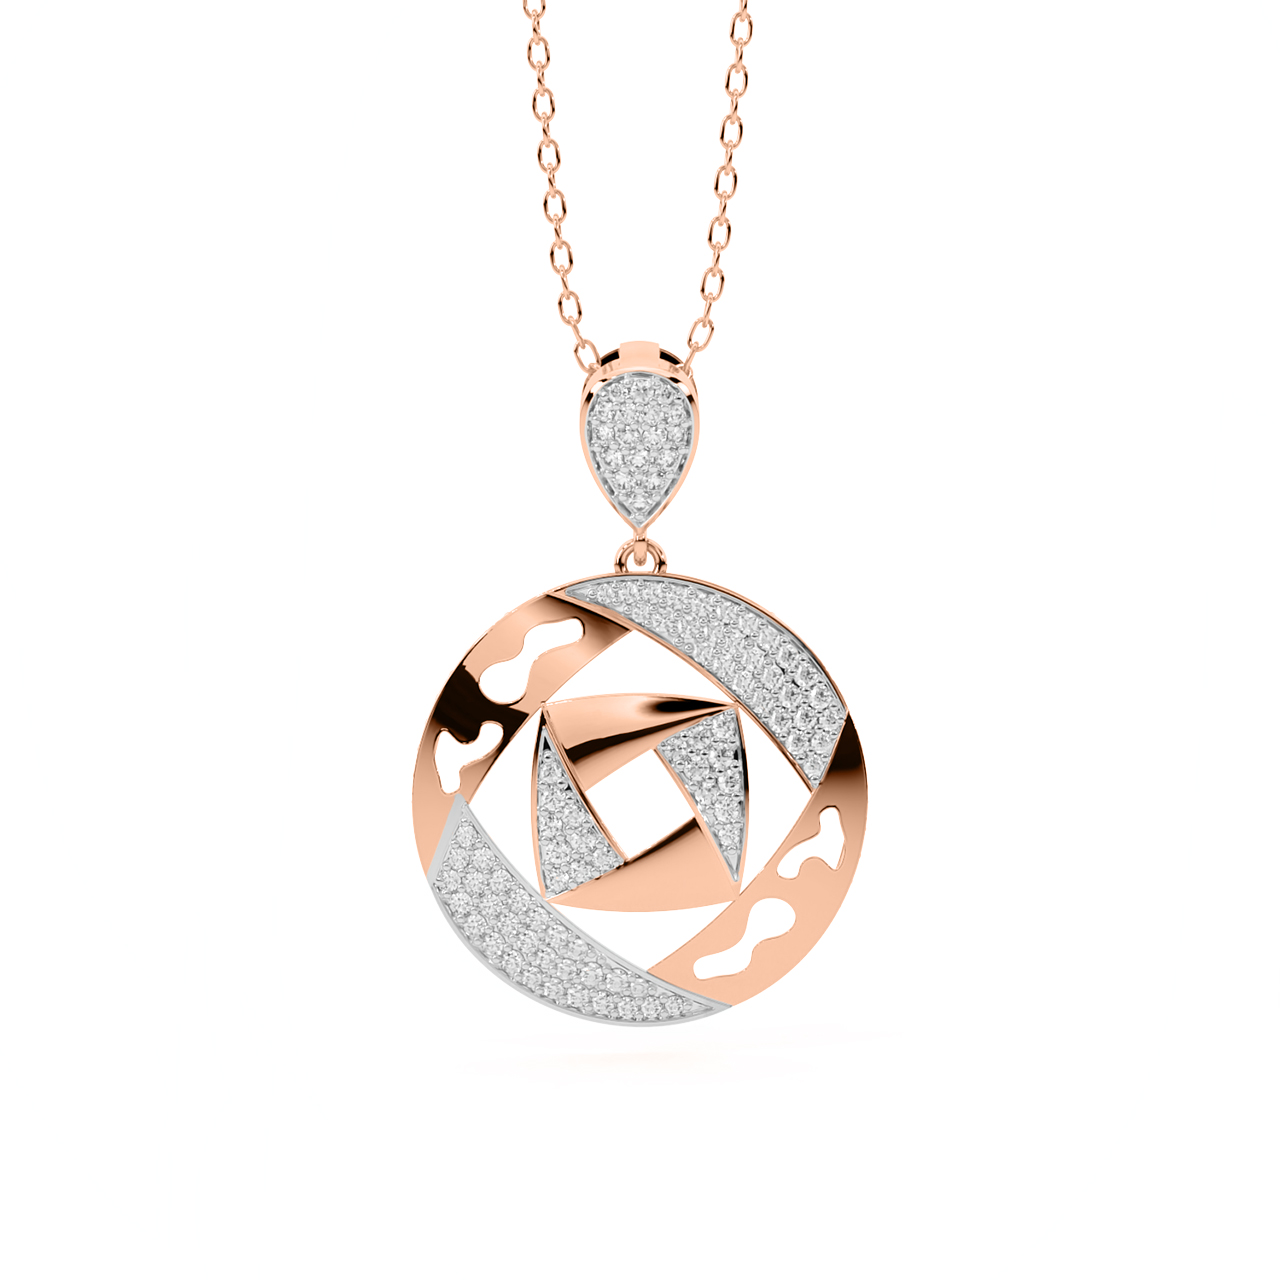 The Geometric Design Diamond Pendant